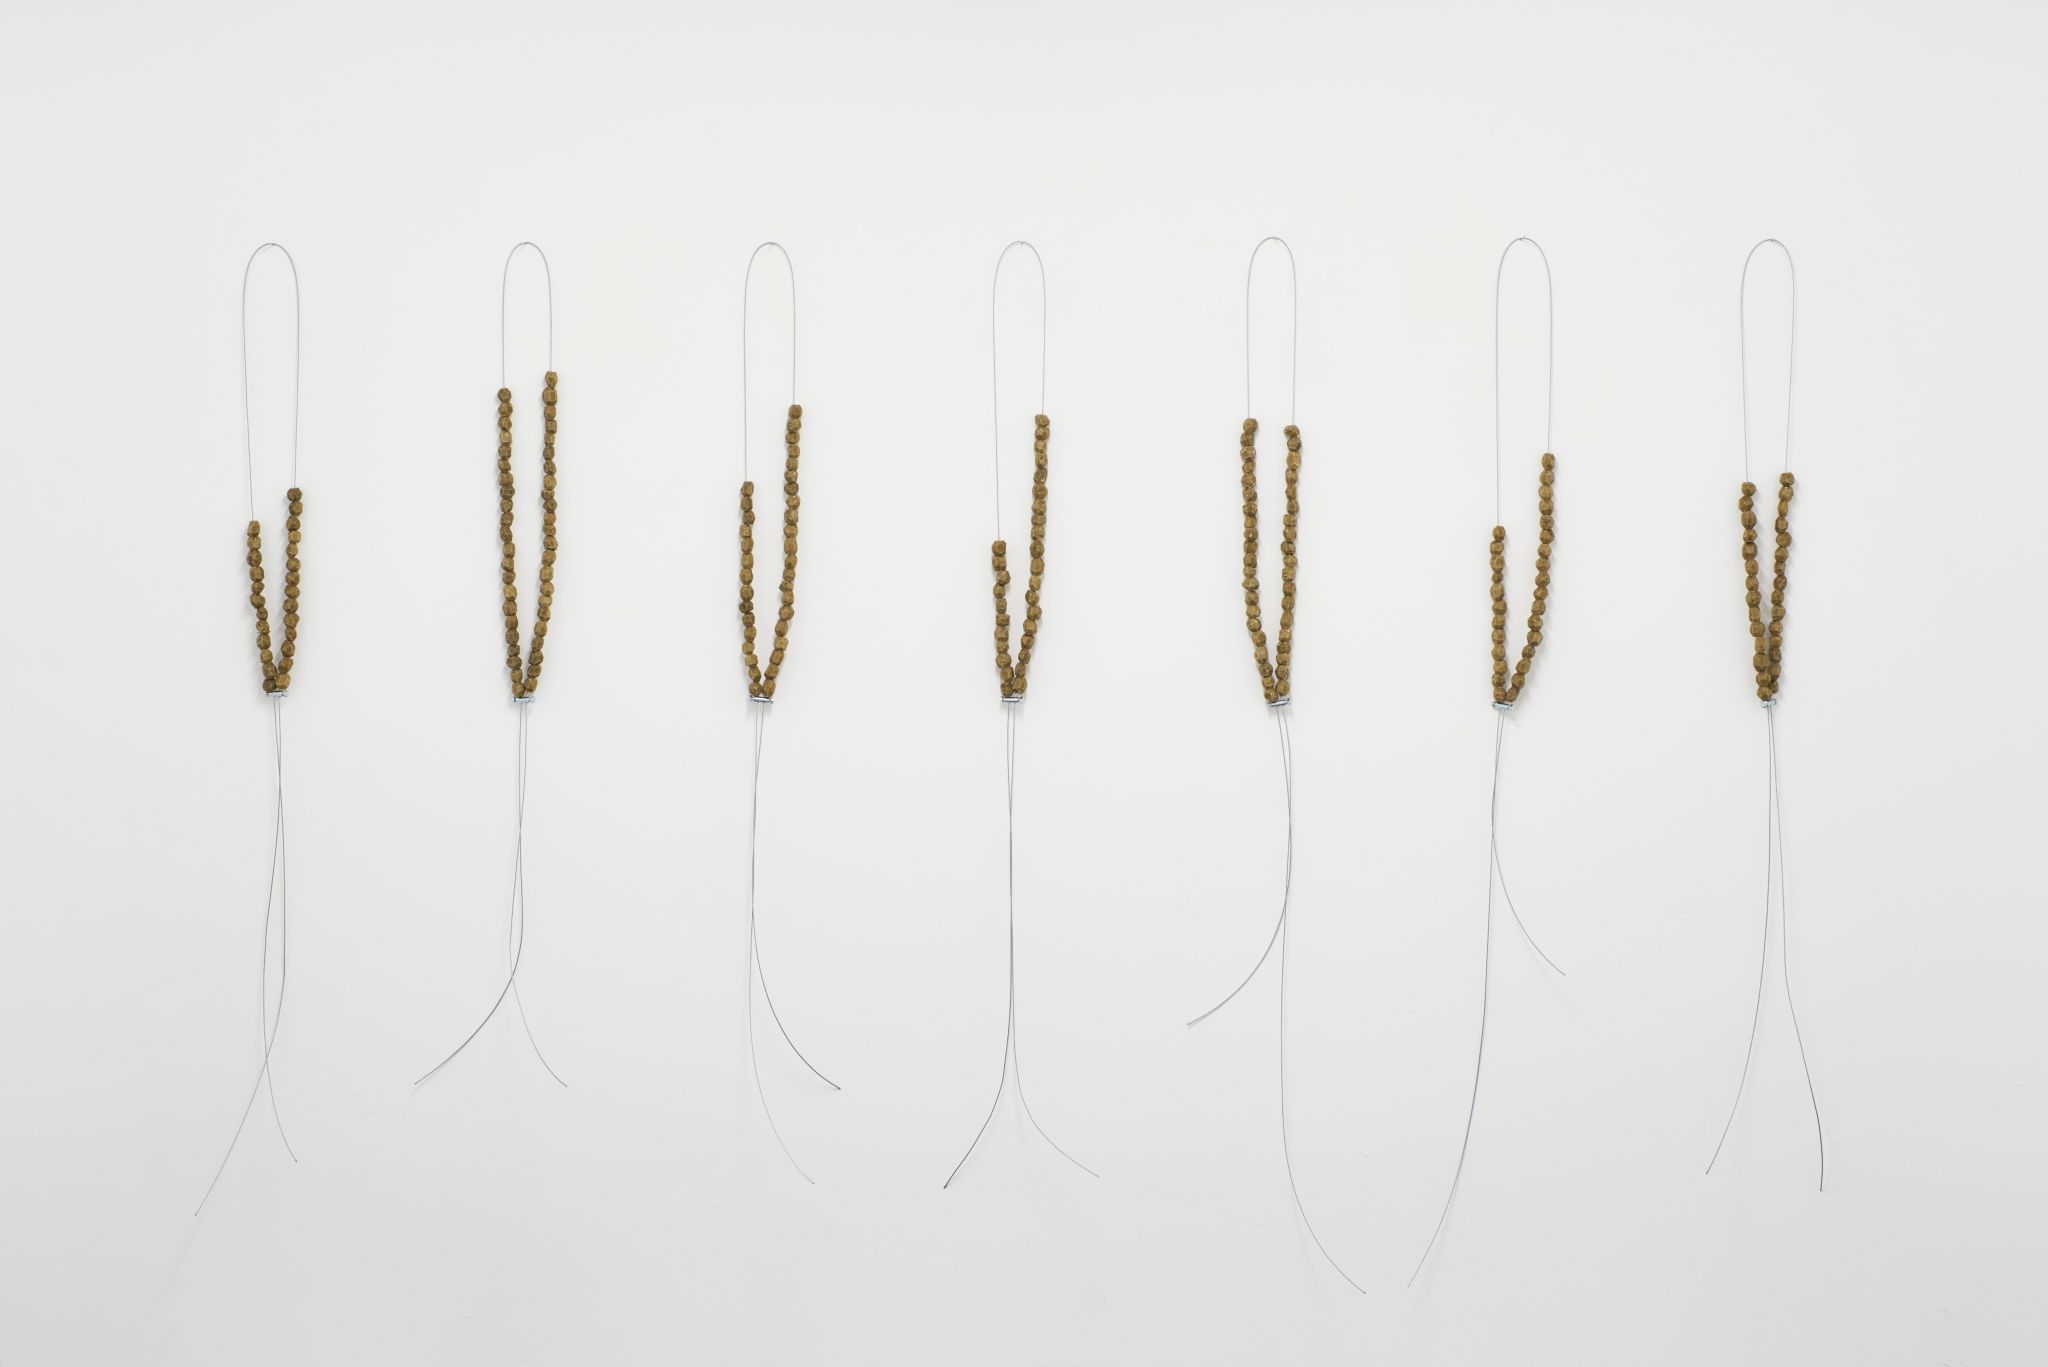 Davide Stucchi, Necklace (Koboloi) I, 2017, Soap beads, iron wire, 161 ⁠× ⁠7 ⁠× ⁠4 ⁠⁠cm